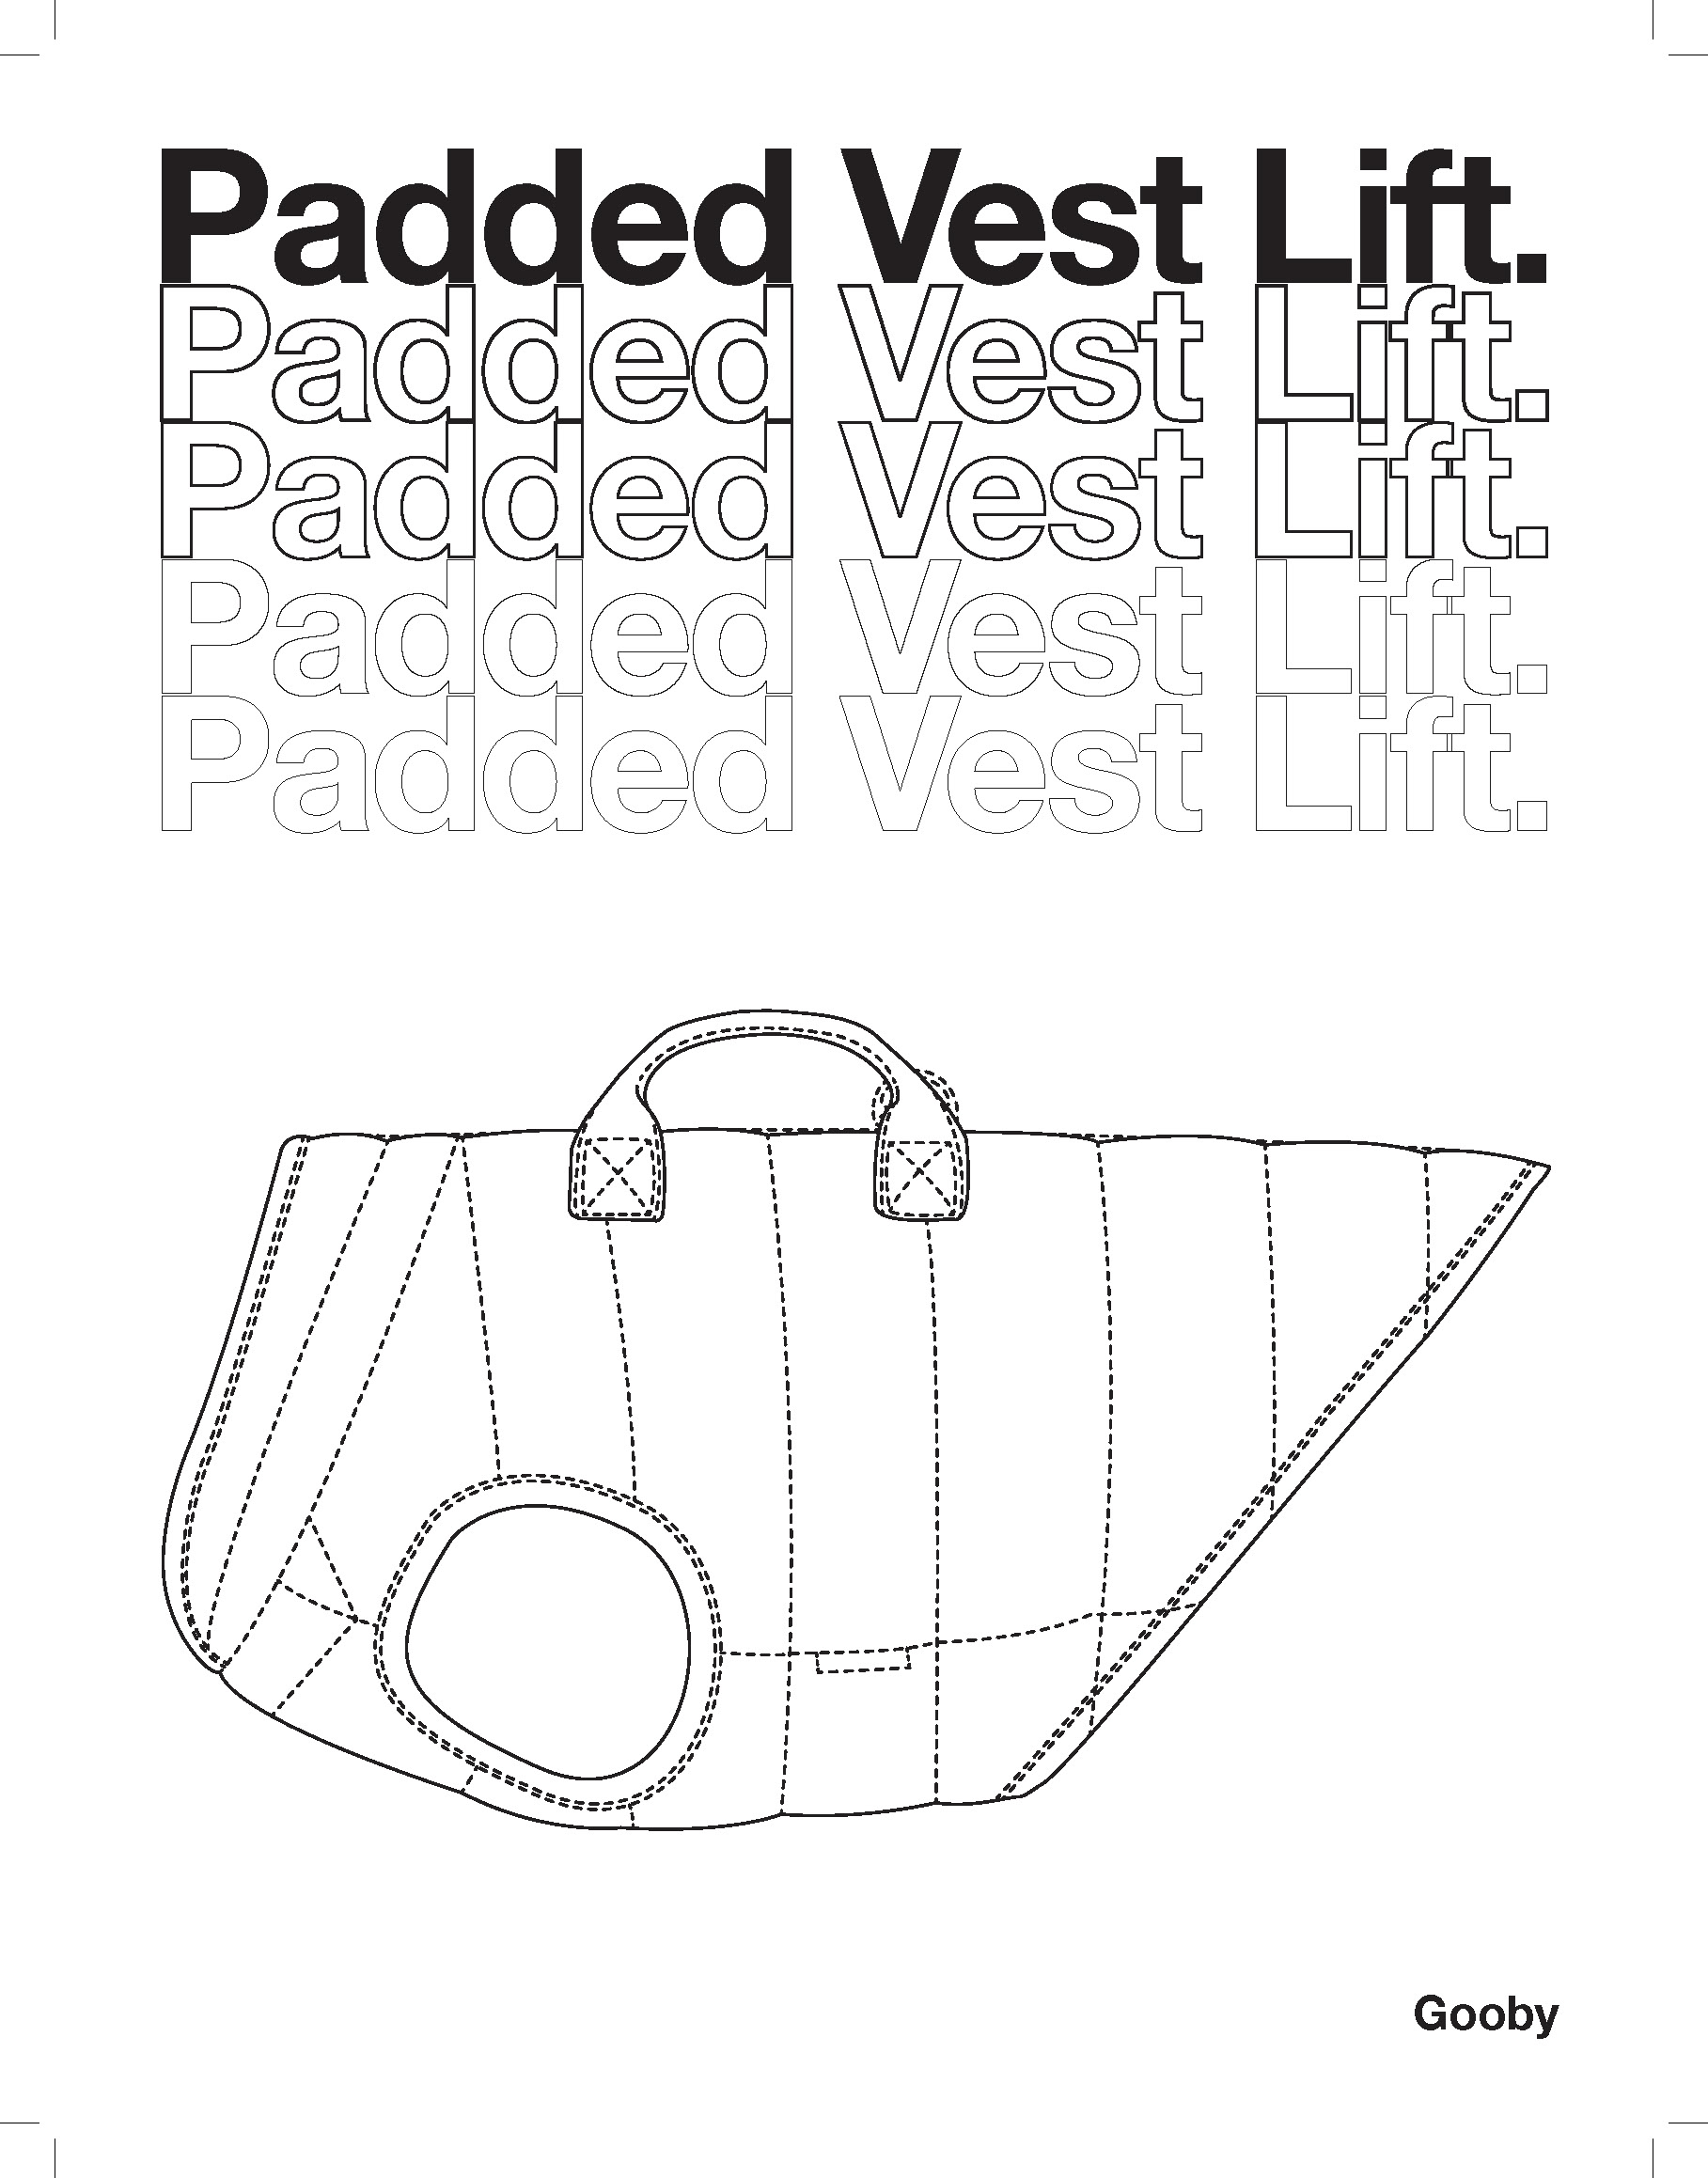 padded vest lift_Page_1.jpg